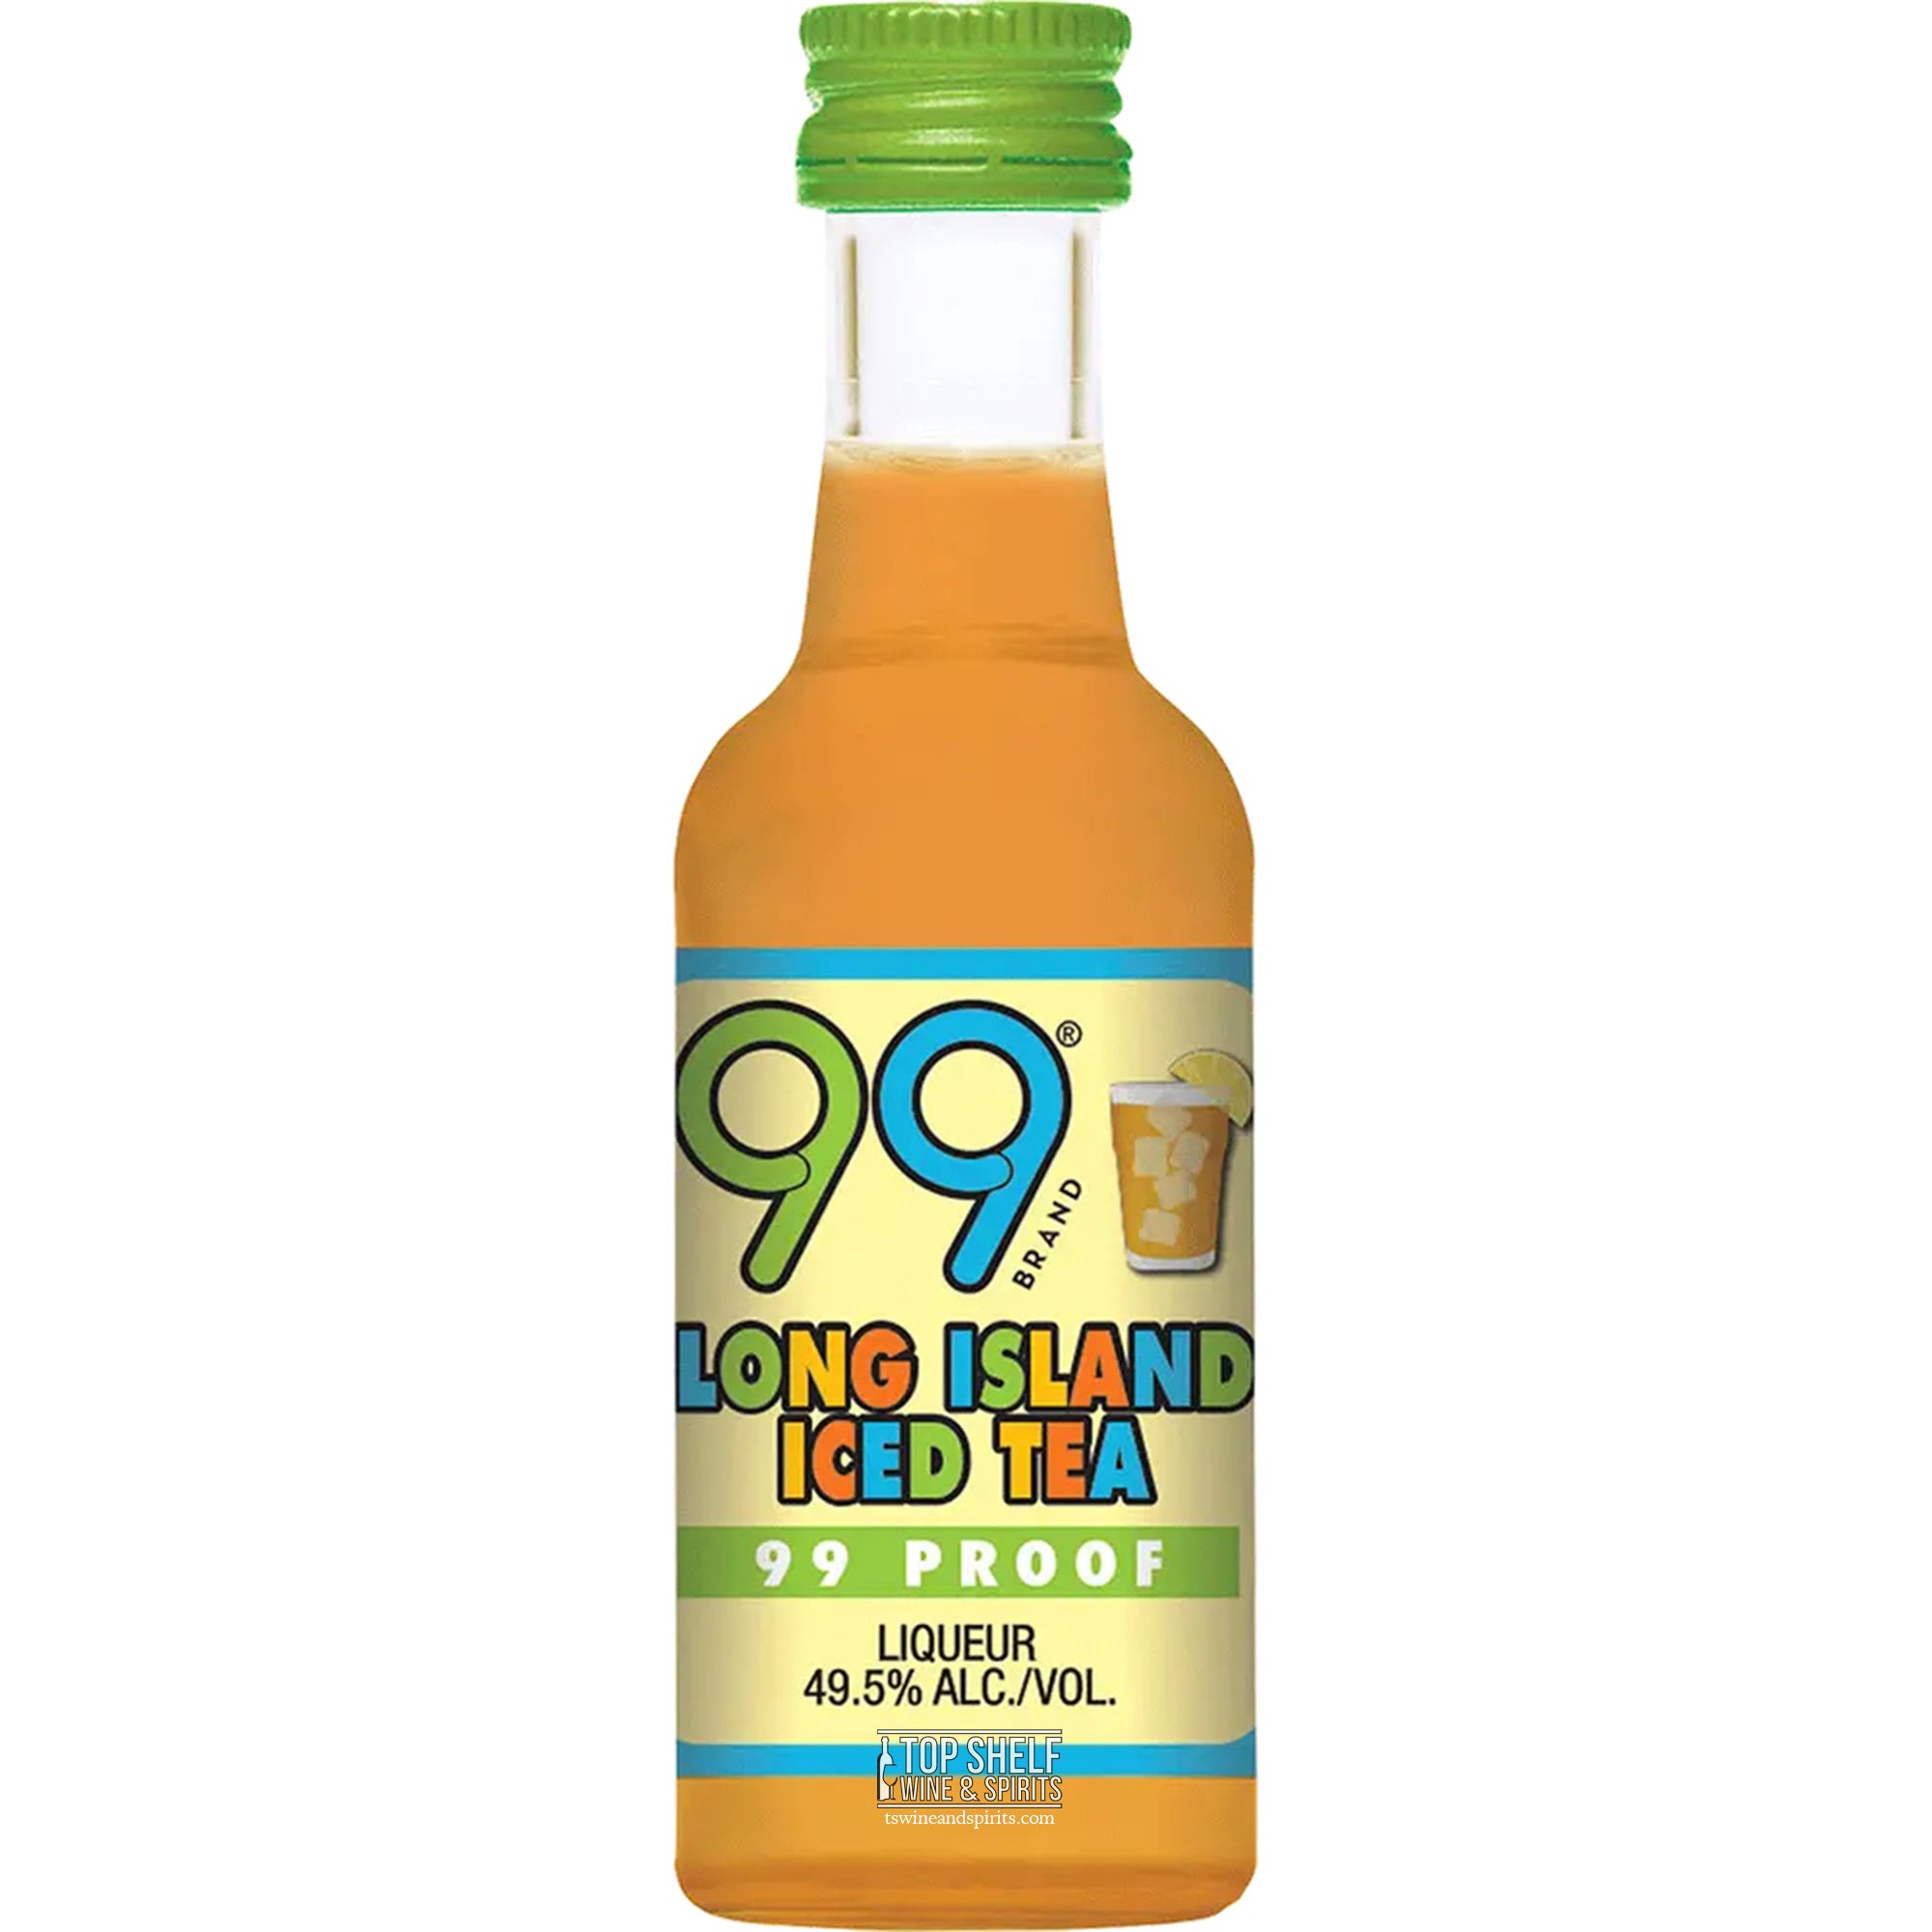 99 Brand Long Island 50ml Sleeve (12 Bottles)